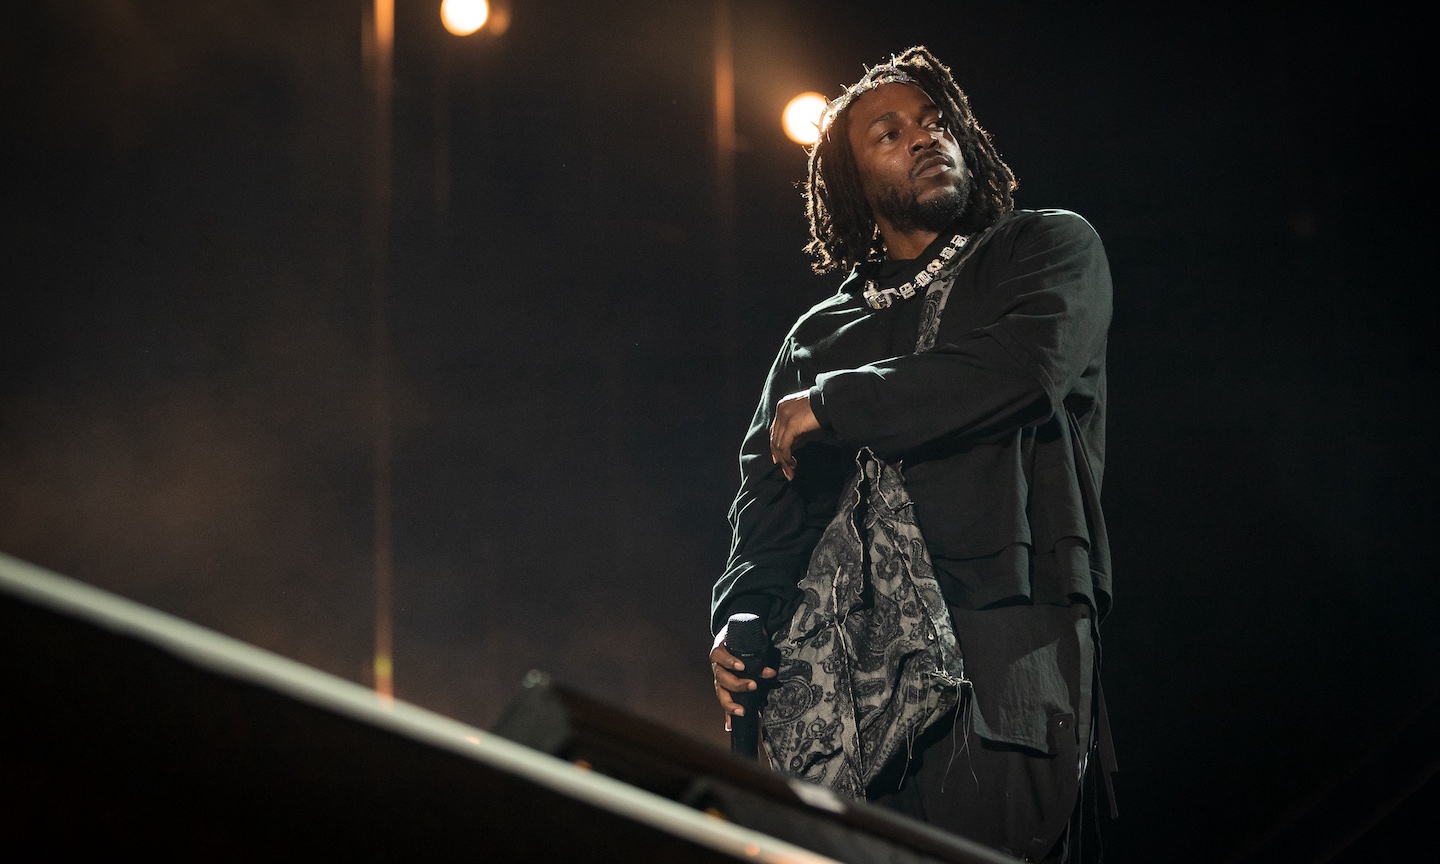 Bonnaroo 2023: Kendrick Lamar, Foo Fighters to Headline Festival